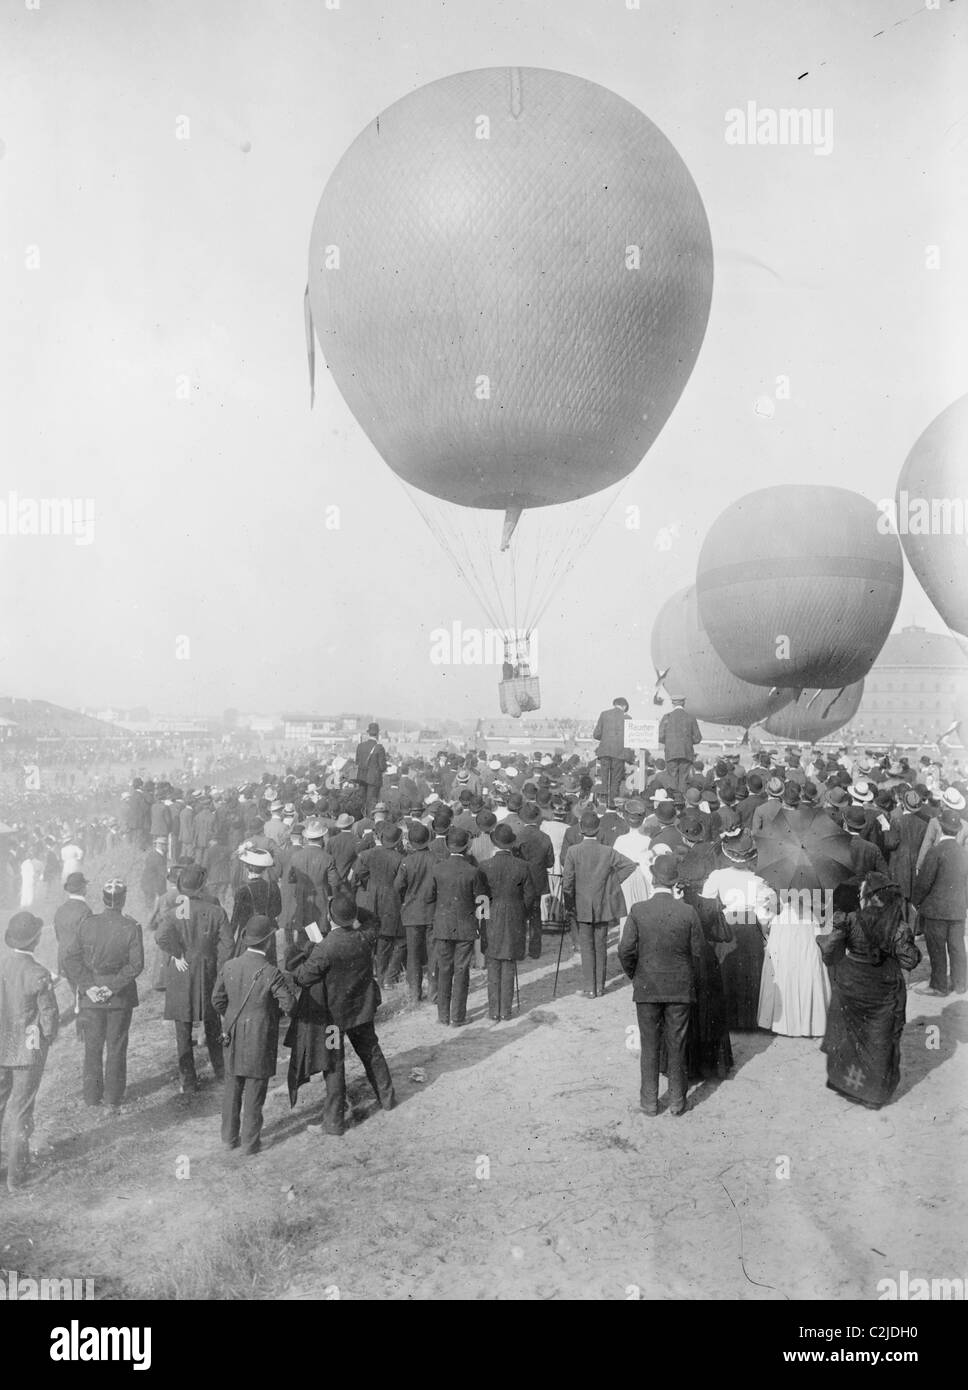 Berlin Balloon Race Banque D'Images